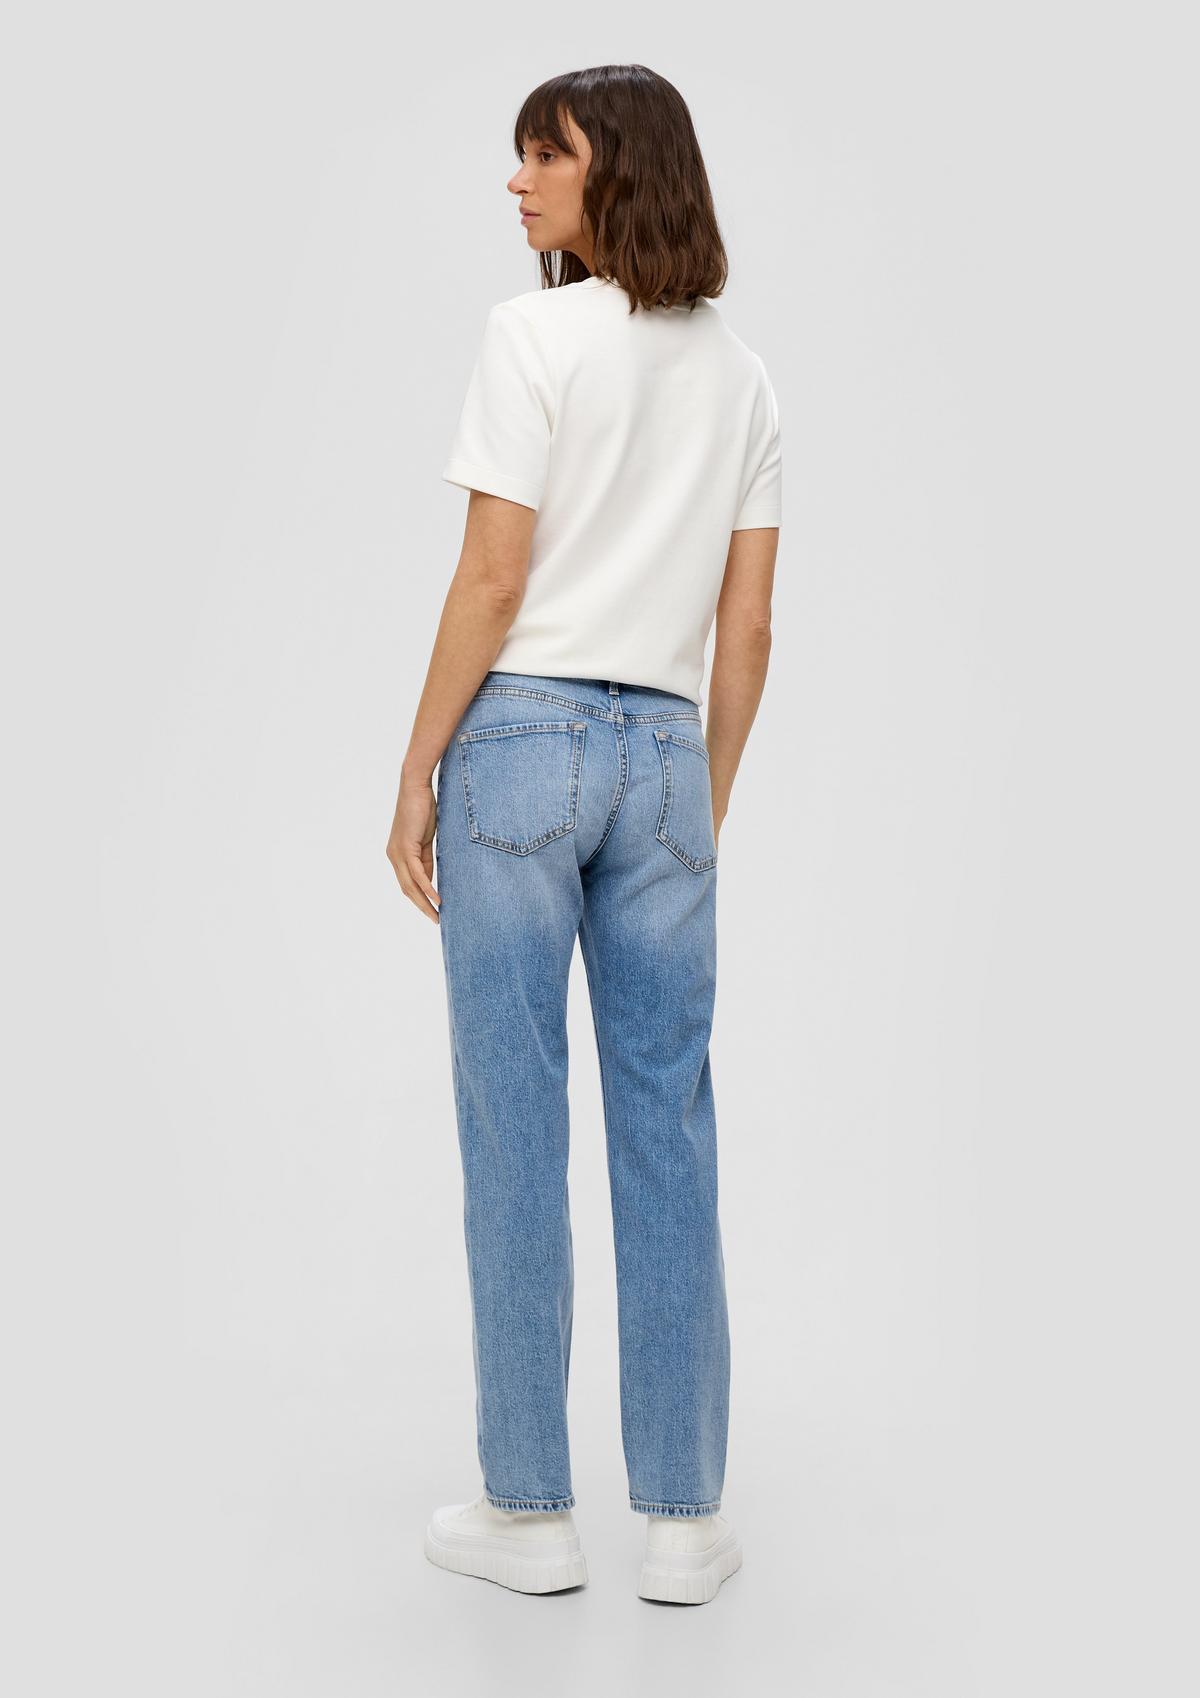 s.Oliver Karolin jeans / regular fit / mid rise / straight leg